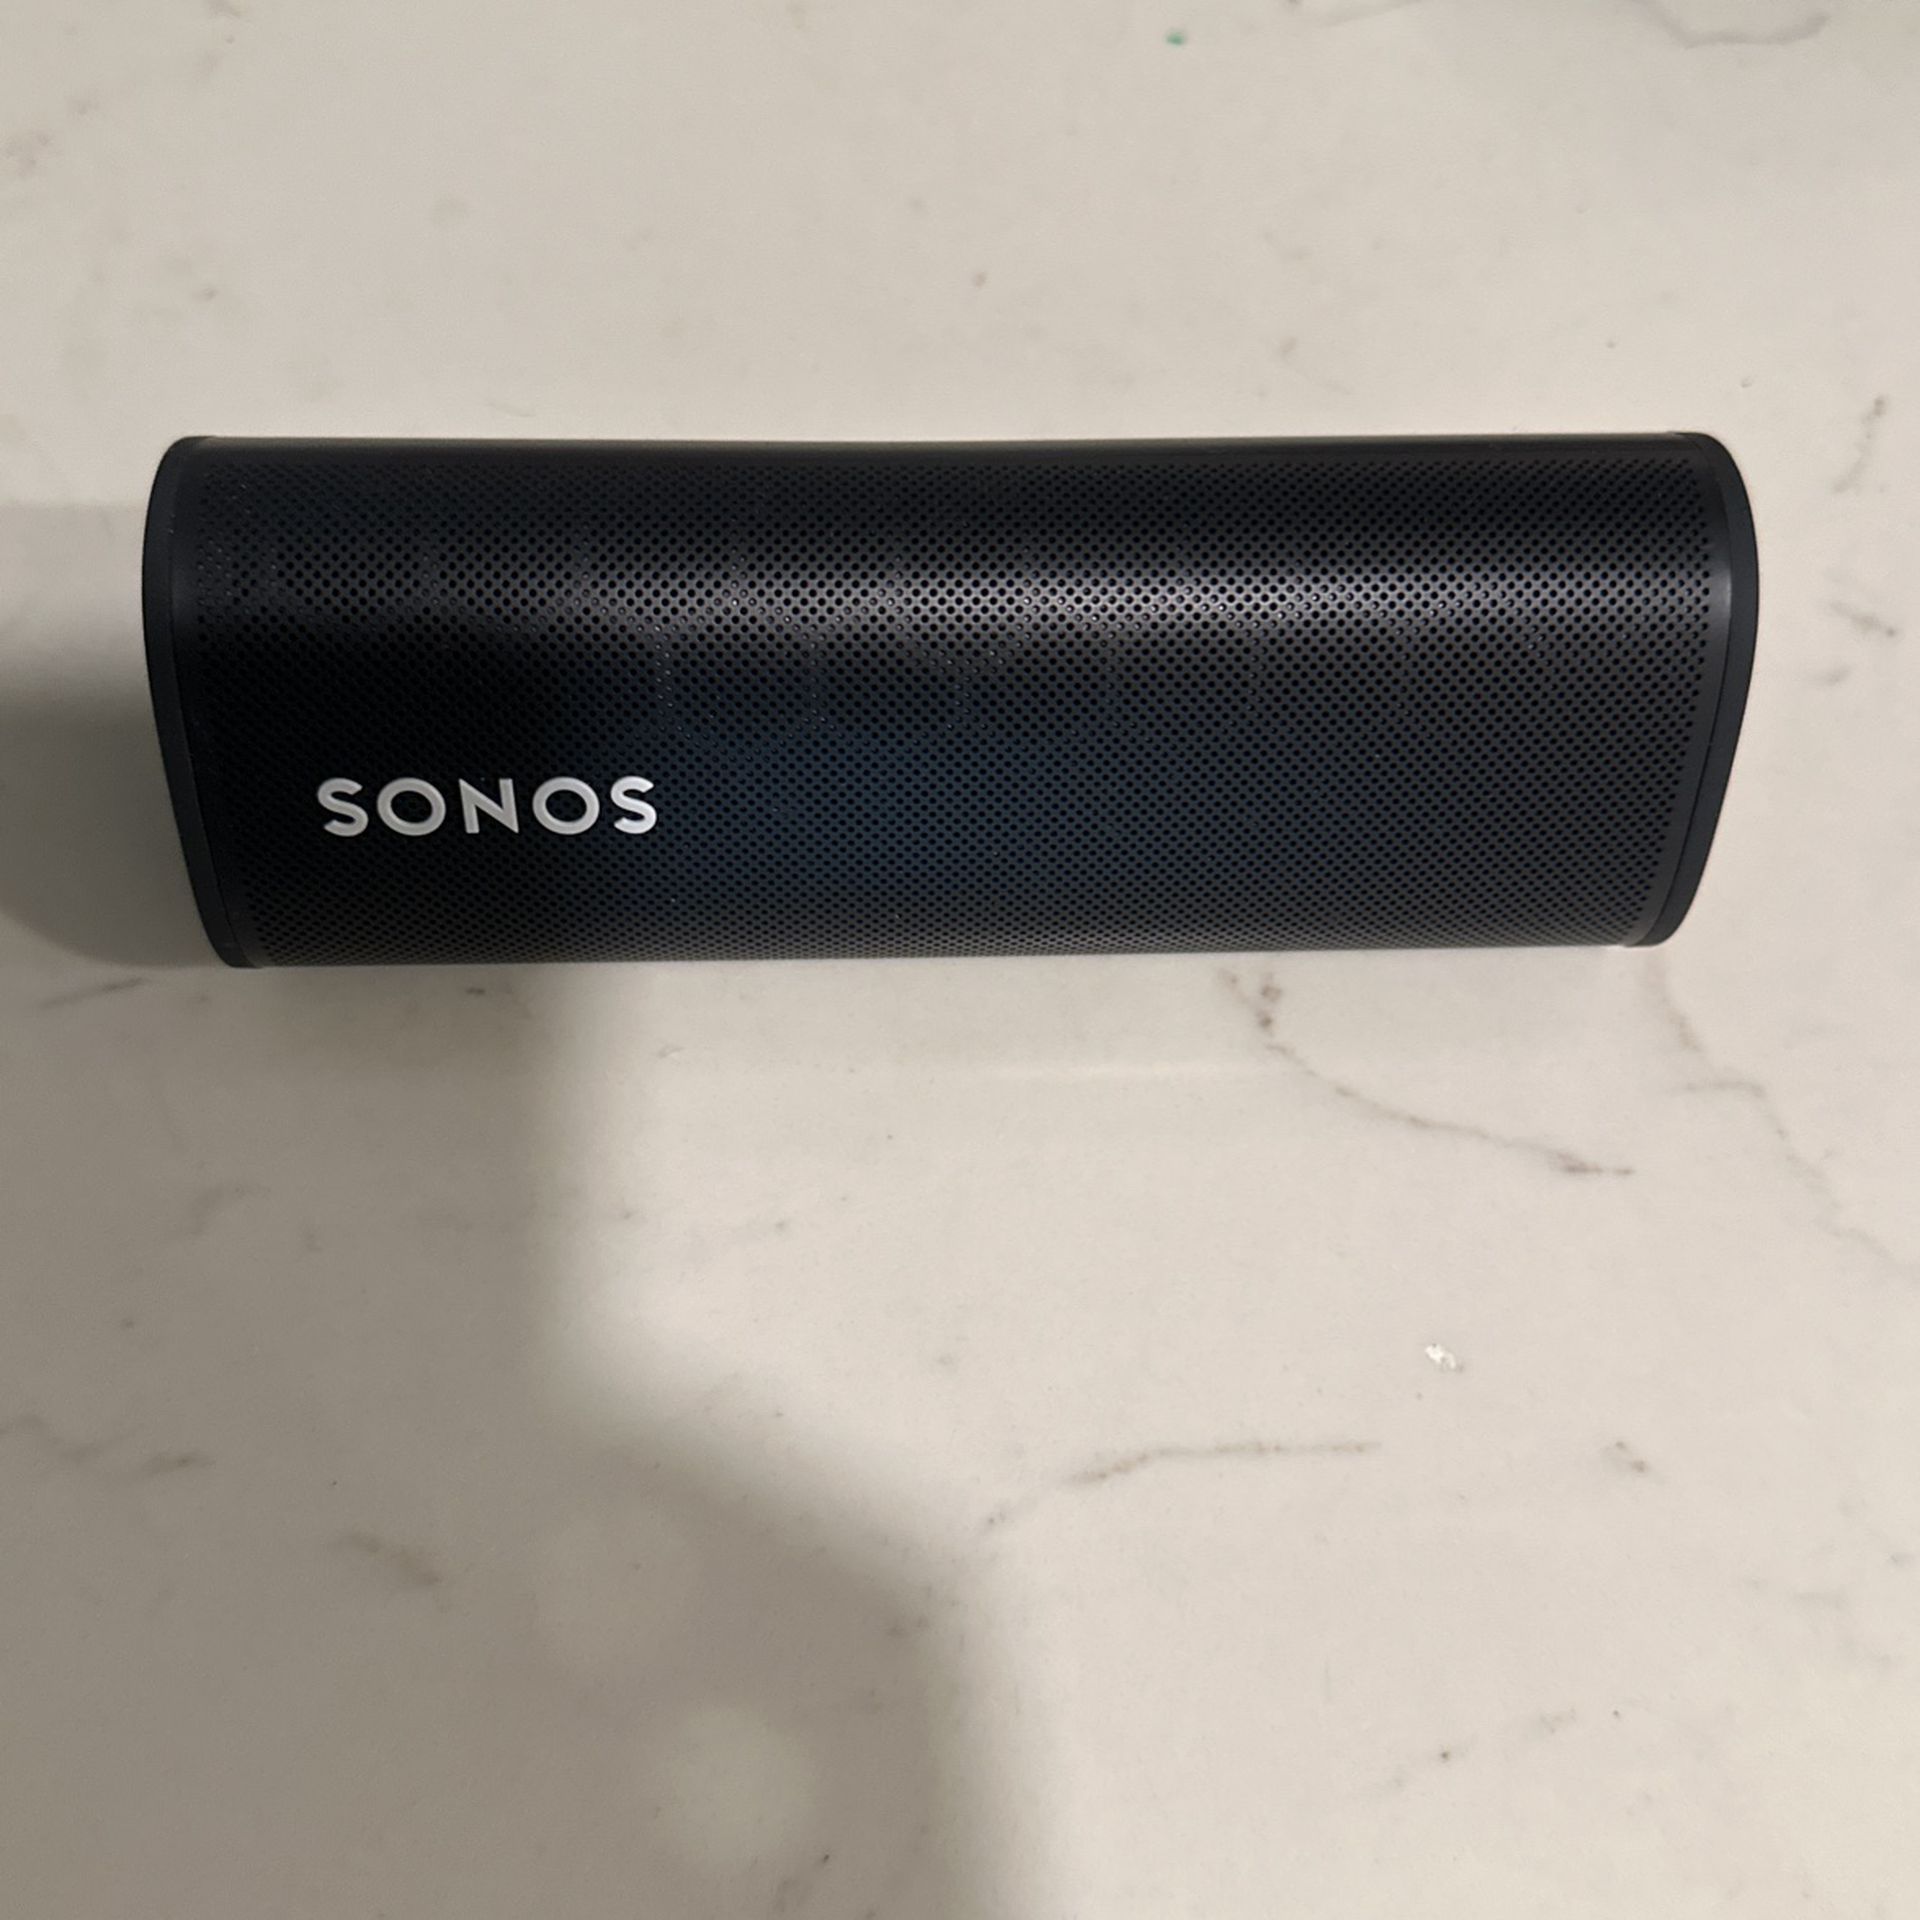 Sonos Portable Speaker With Built In Alexa